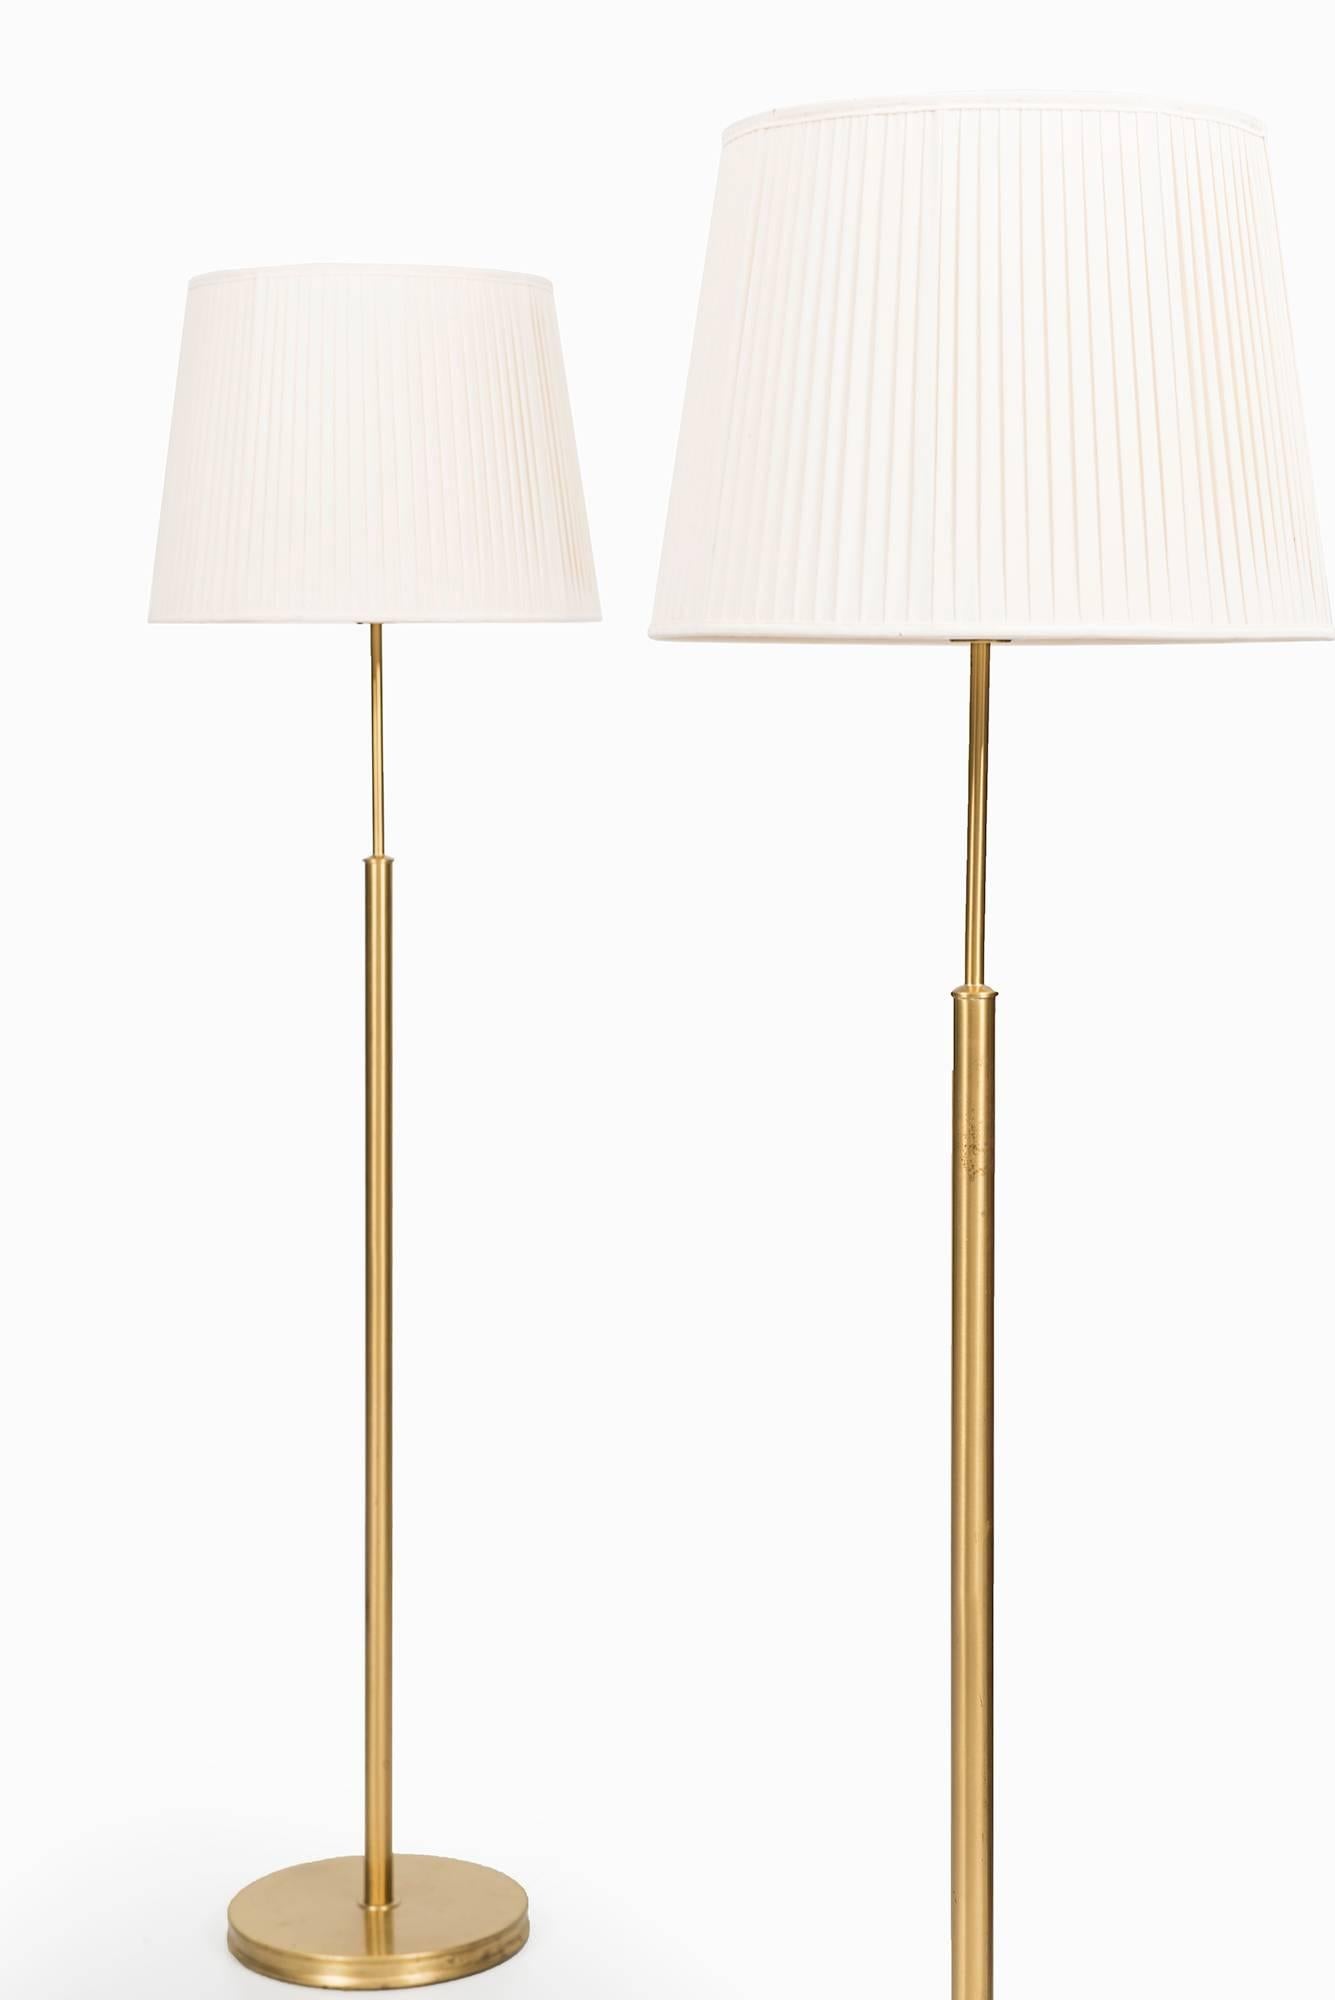 Rare pair of floor lamps model 2148 designed by Josef Frank. Produced by Svenskt Tenn in Sweden.